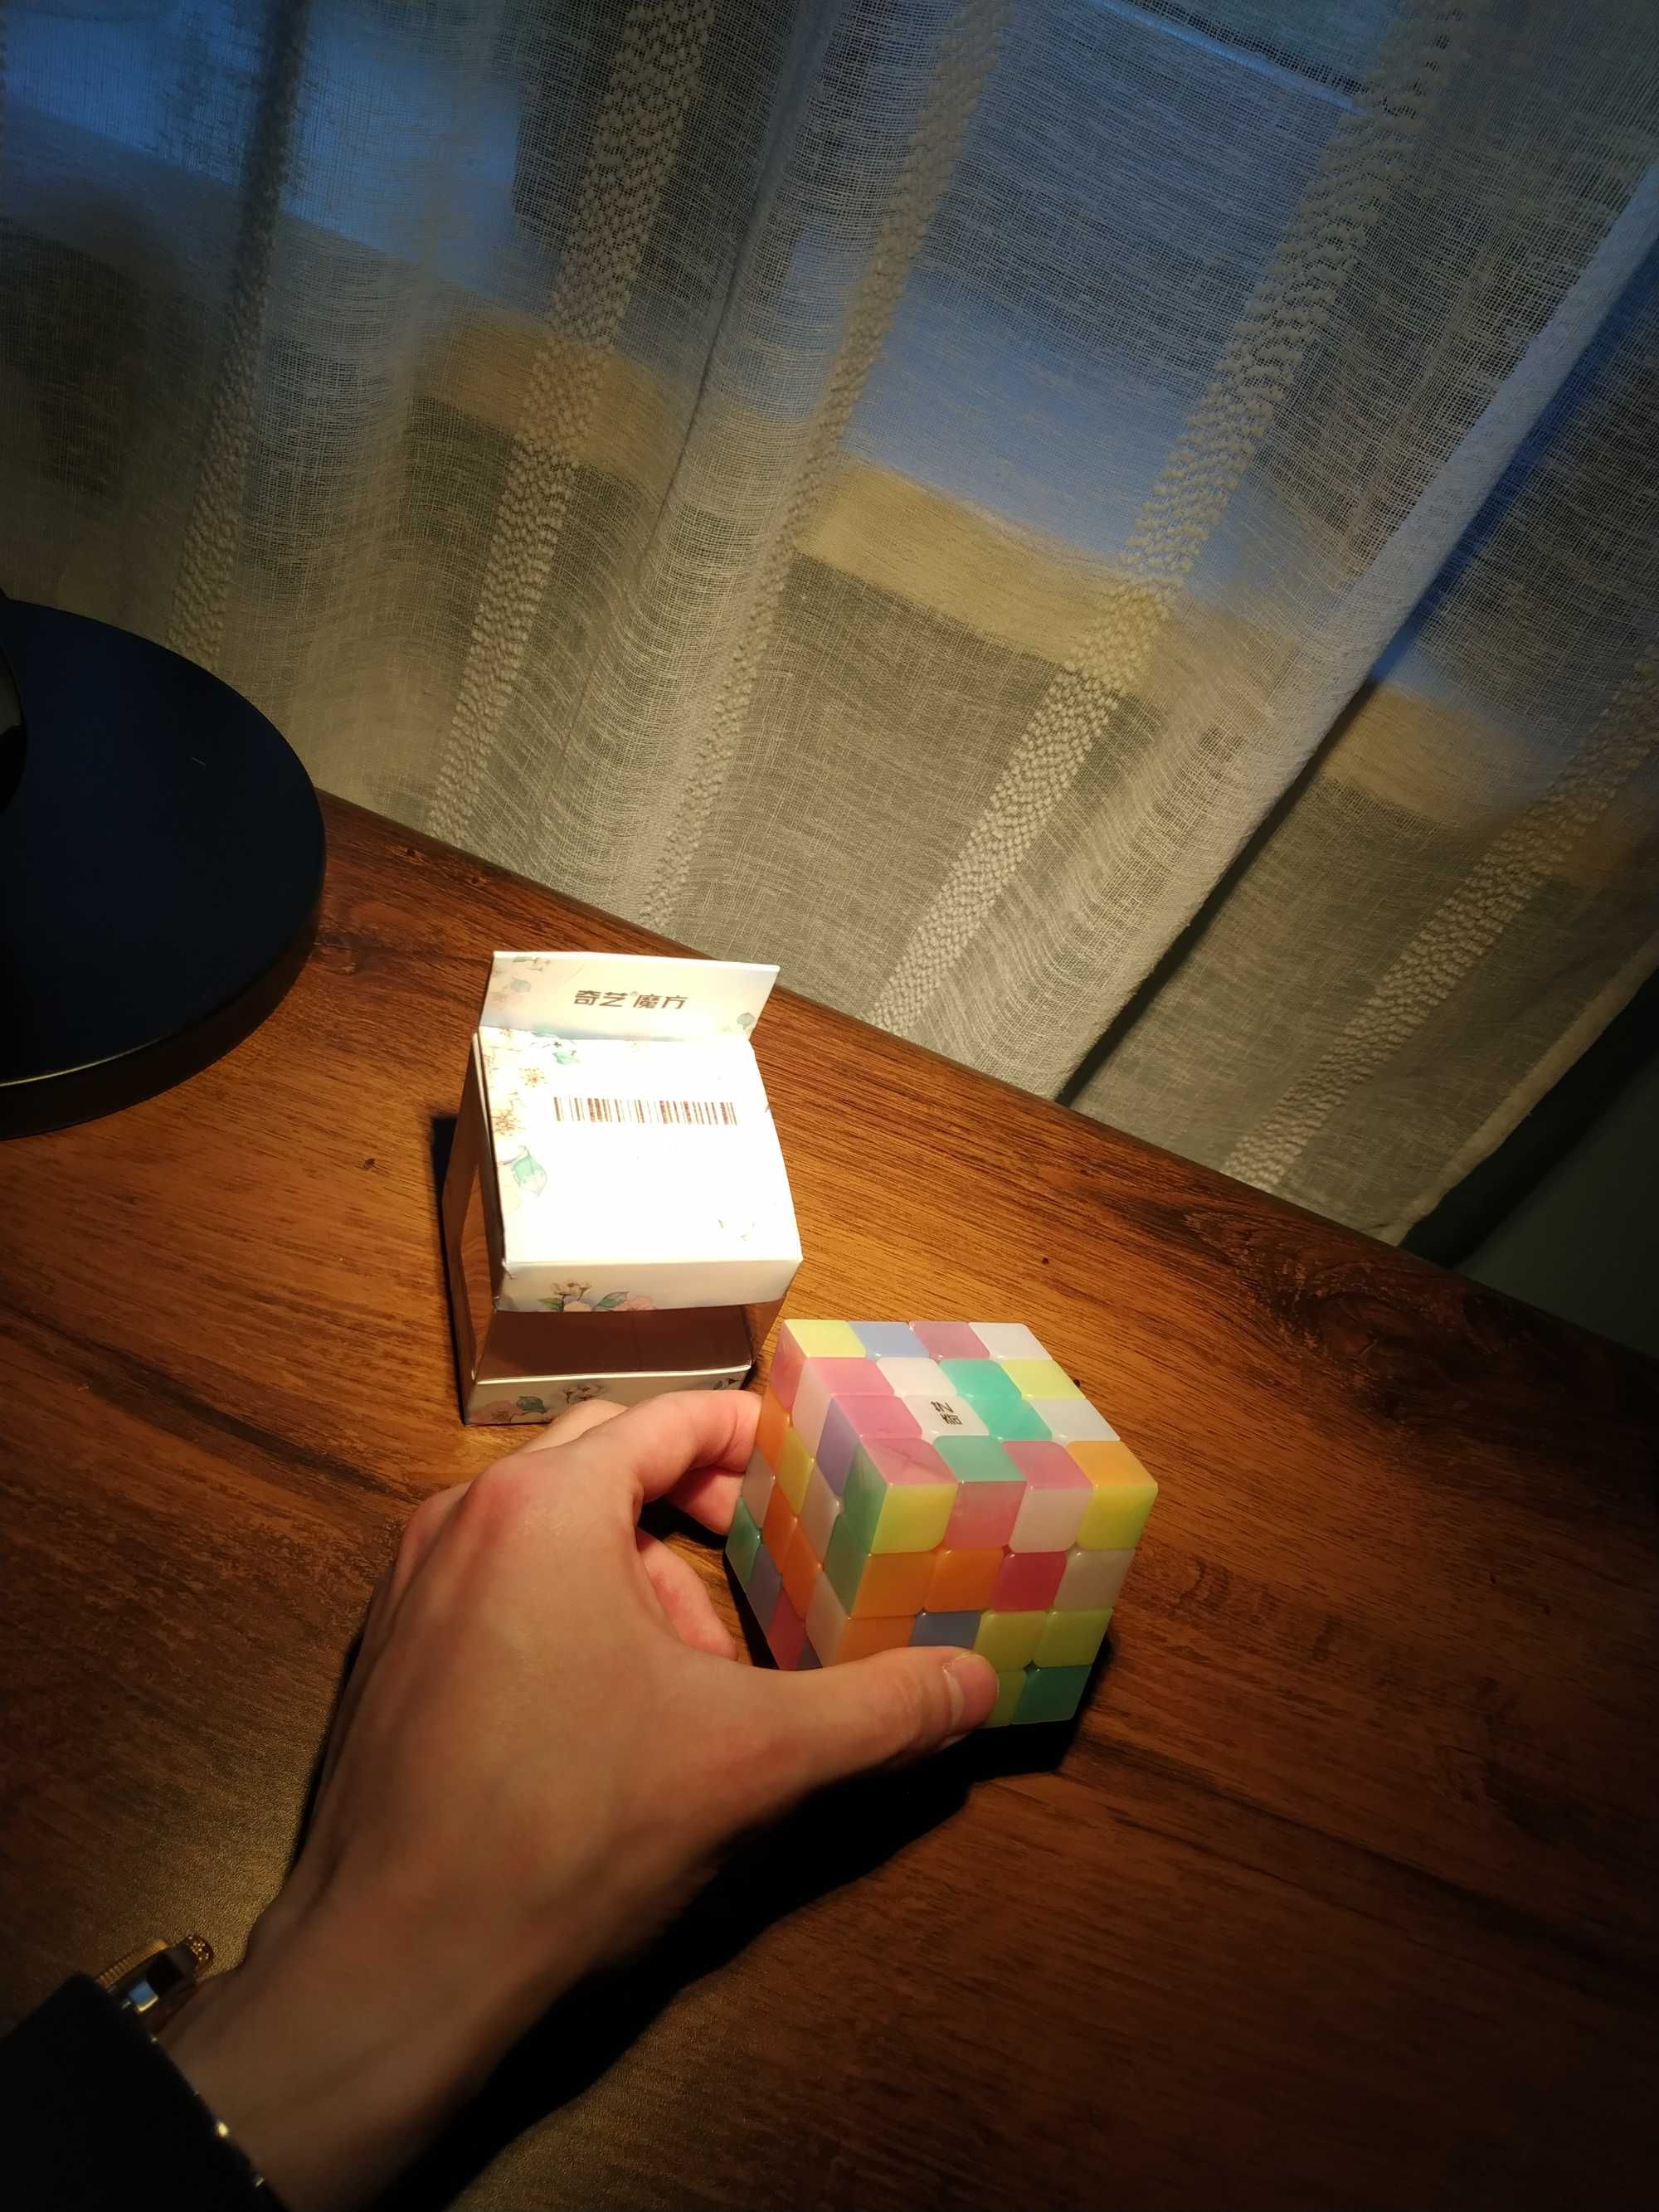 Kostka Rubika QiYi QiYuan S 4x4x4 NOWA